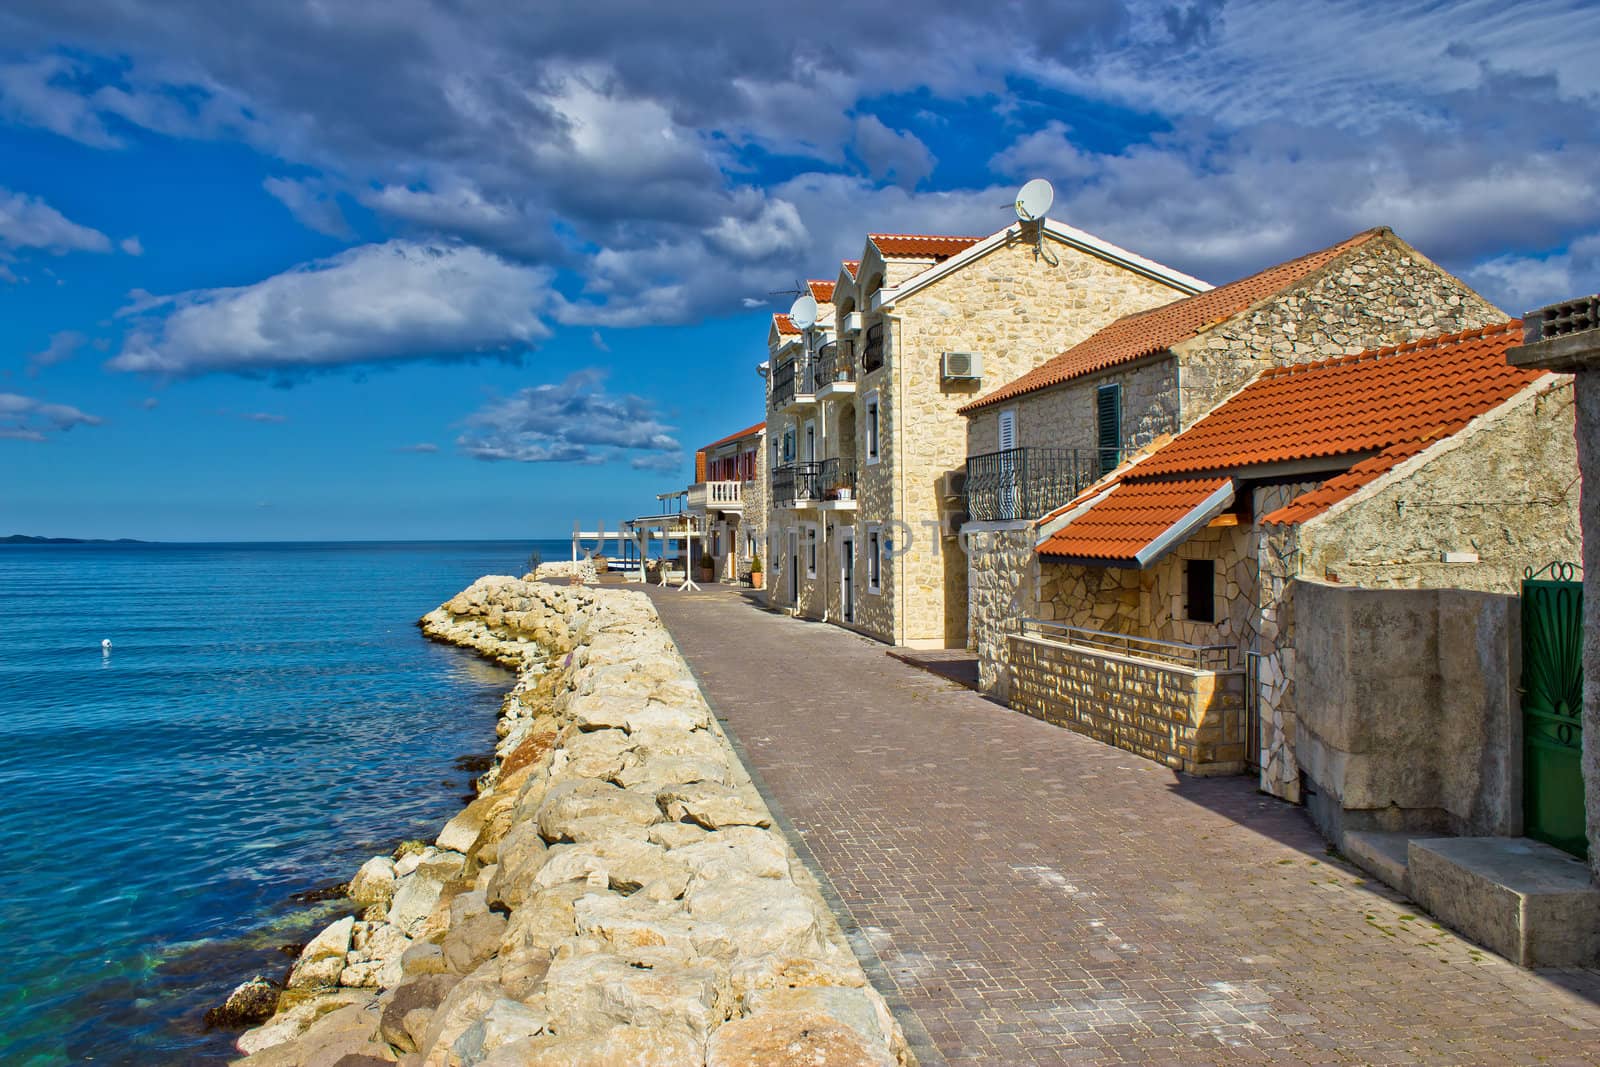 Adriatic coast - Dalmatian town of Bibinje waterfront, Croatia